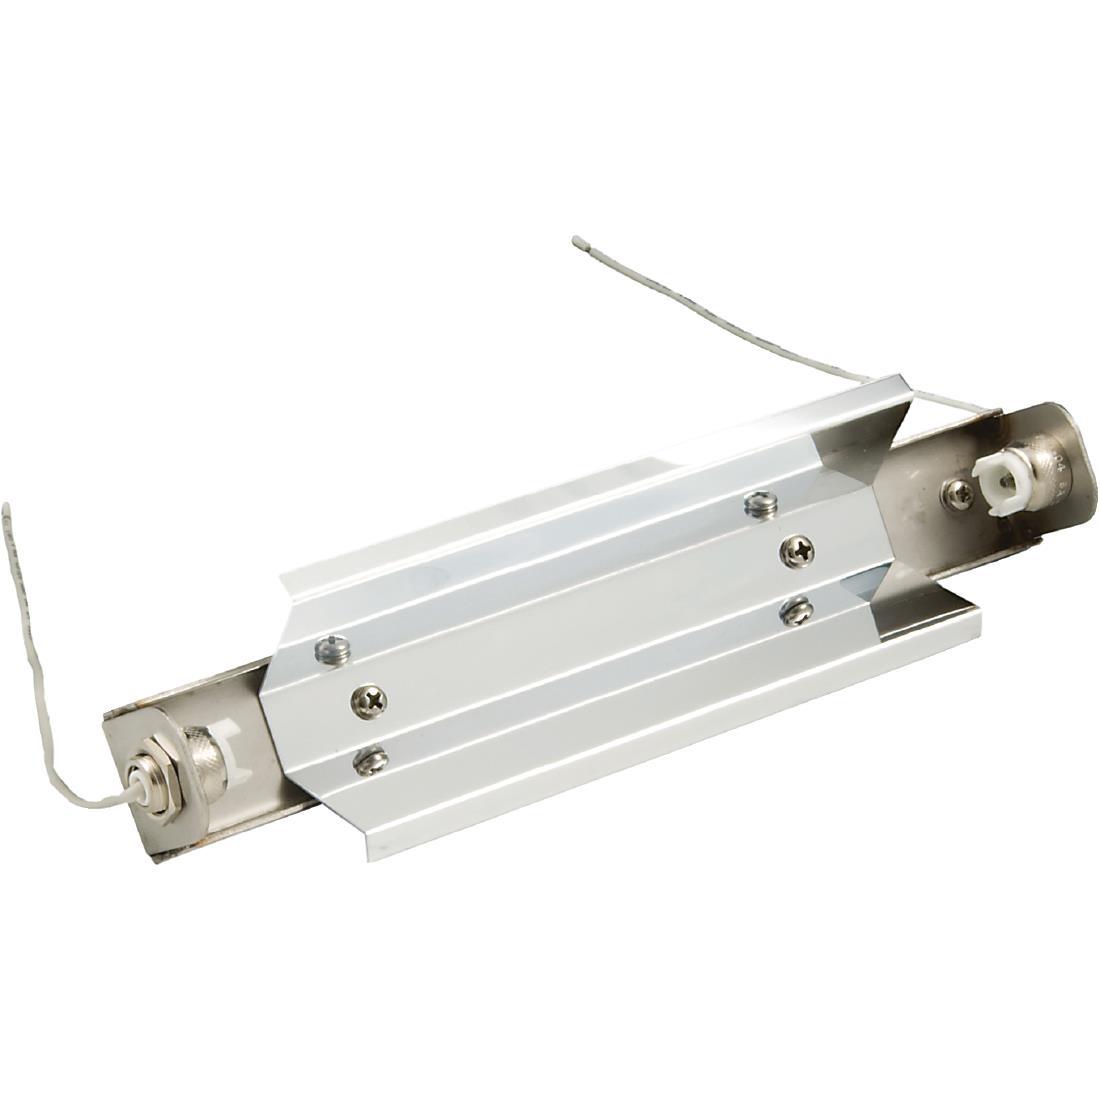 220mm Lamp Reflector - GC884  - 1